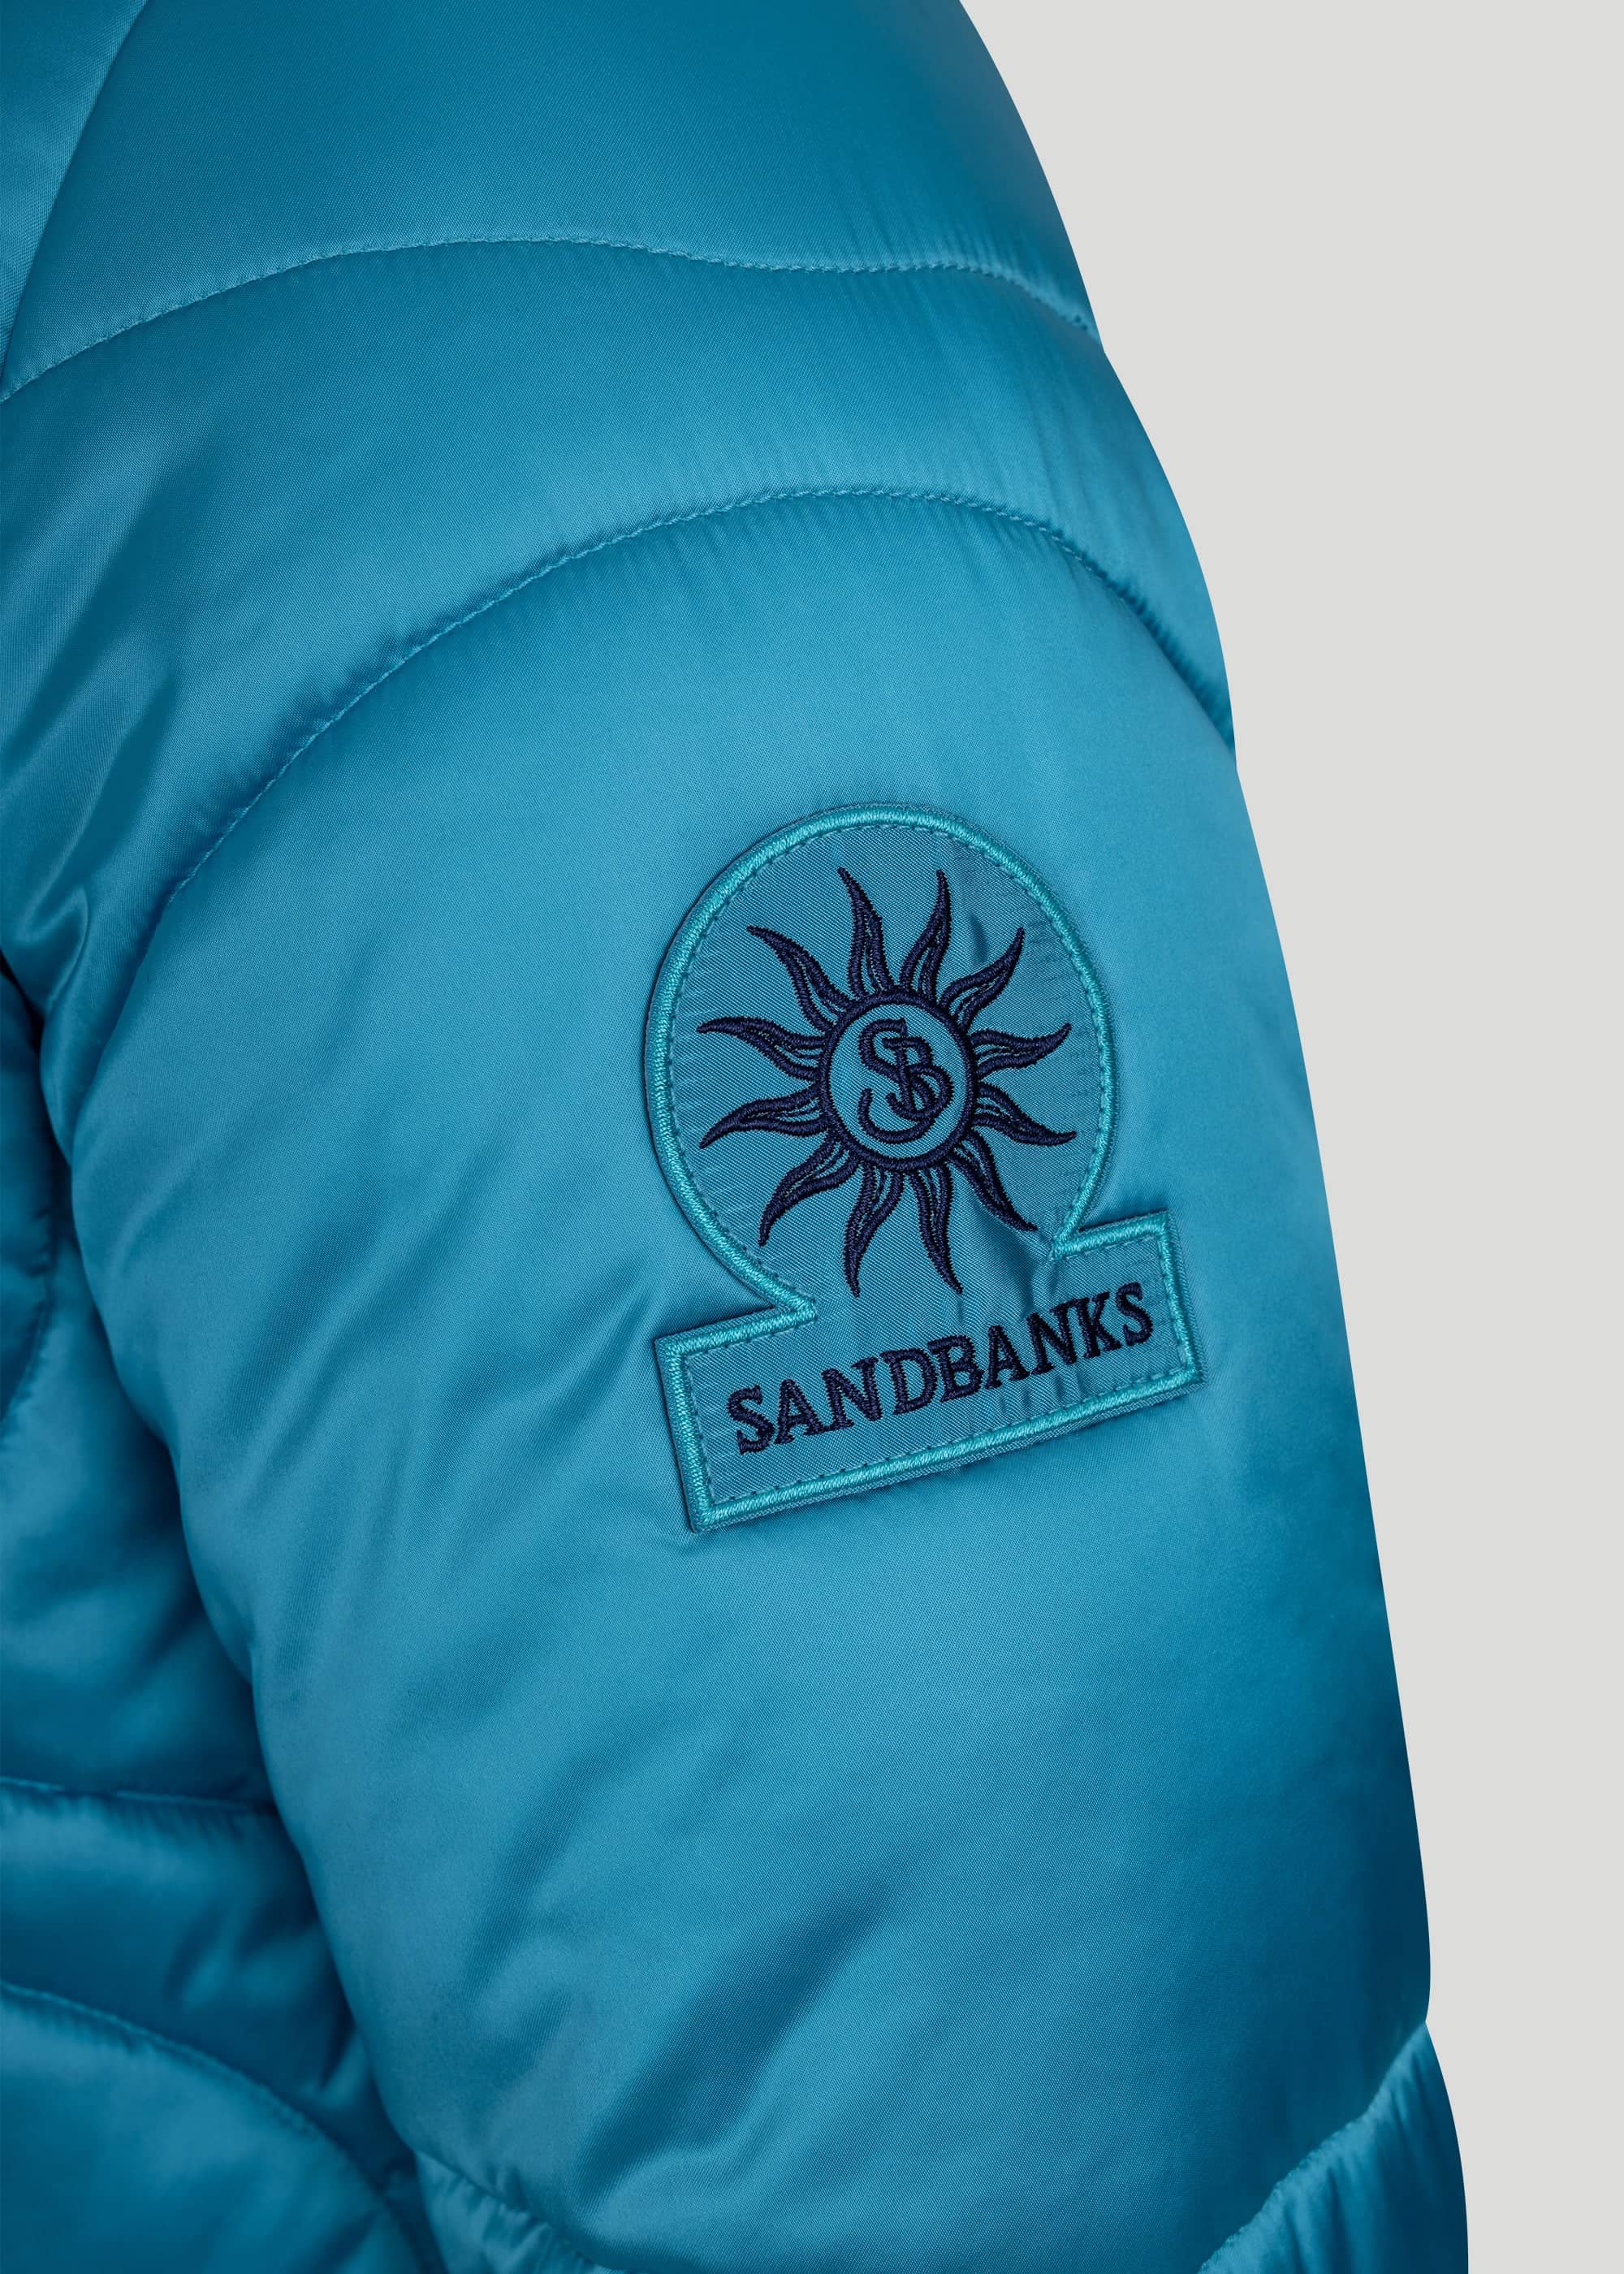 Sandbanks Salterns ECONYL® Puffer Jacket - Caribbean Sea - sandbanksco.com